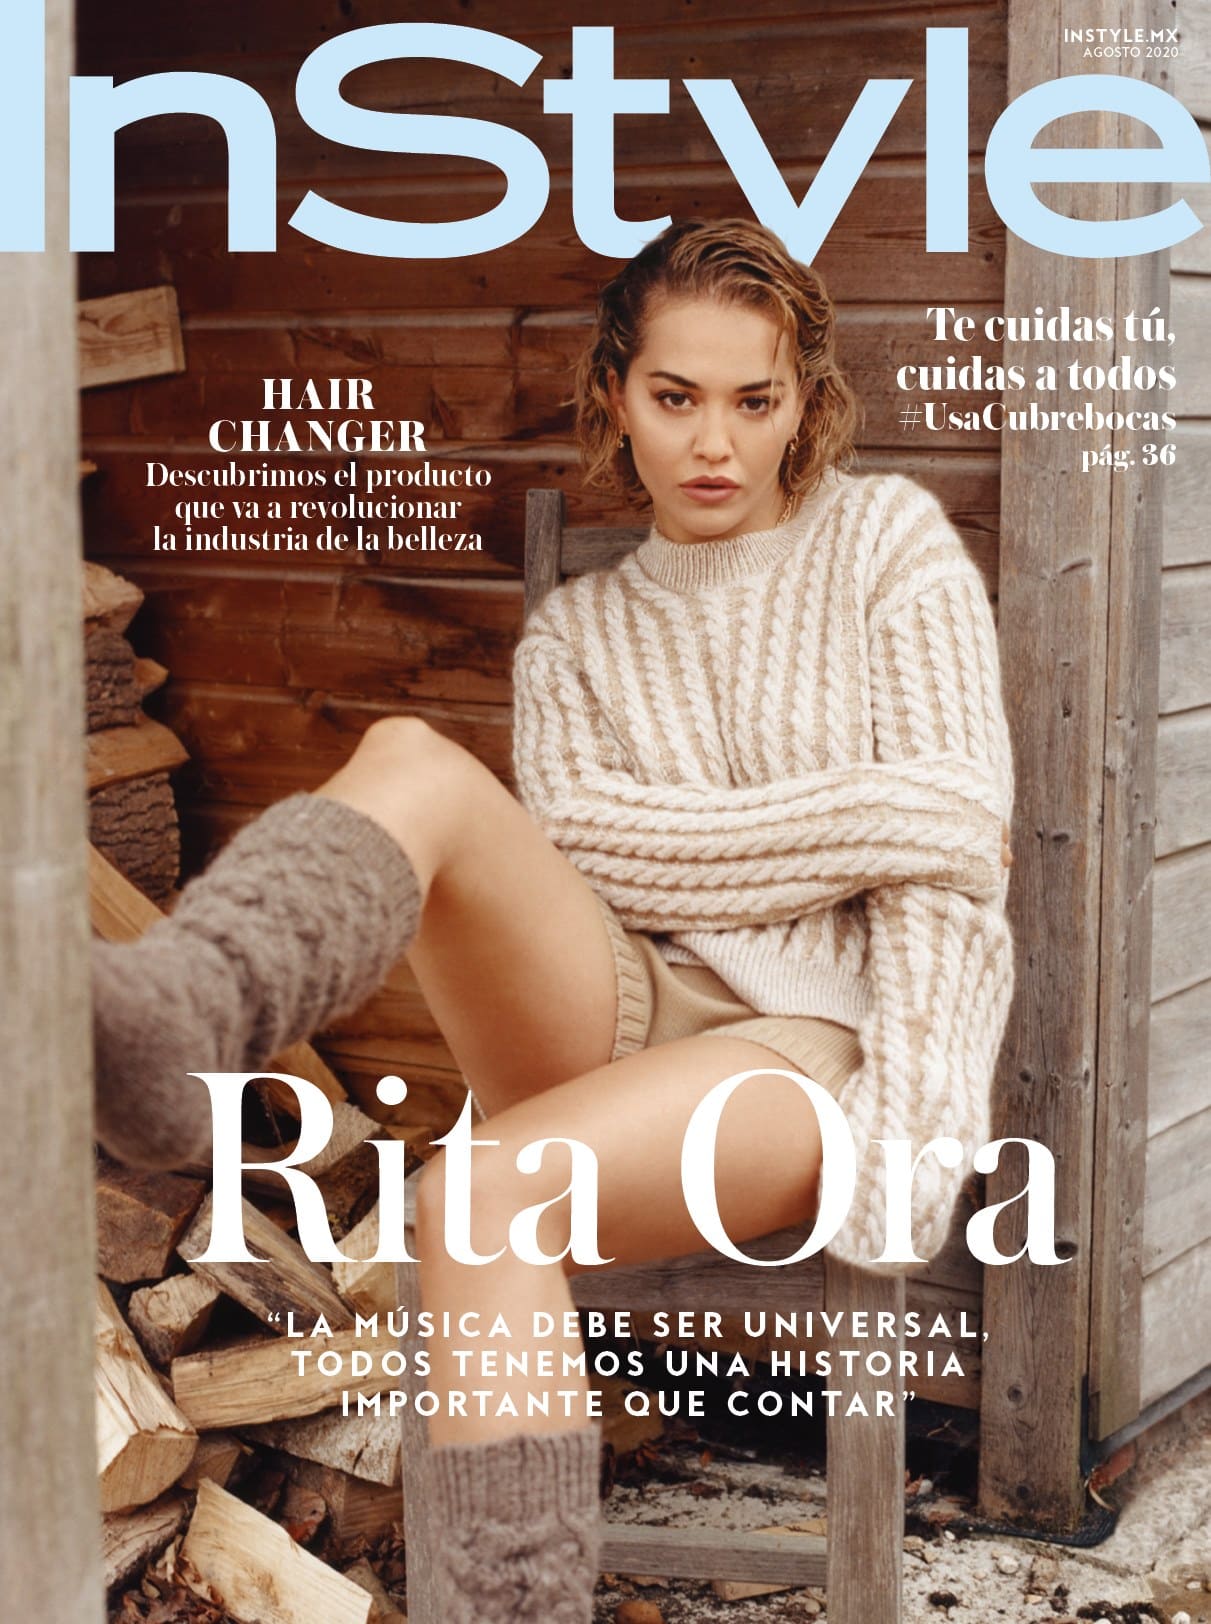 FOTOS Vida en la granja de Rita Ora! - Photo 10